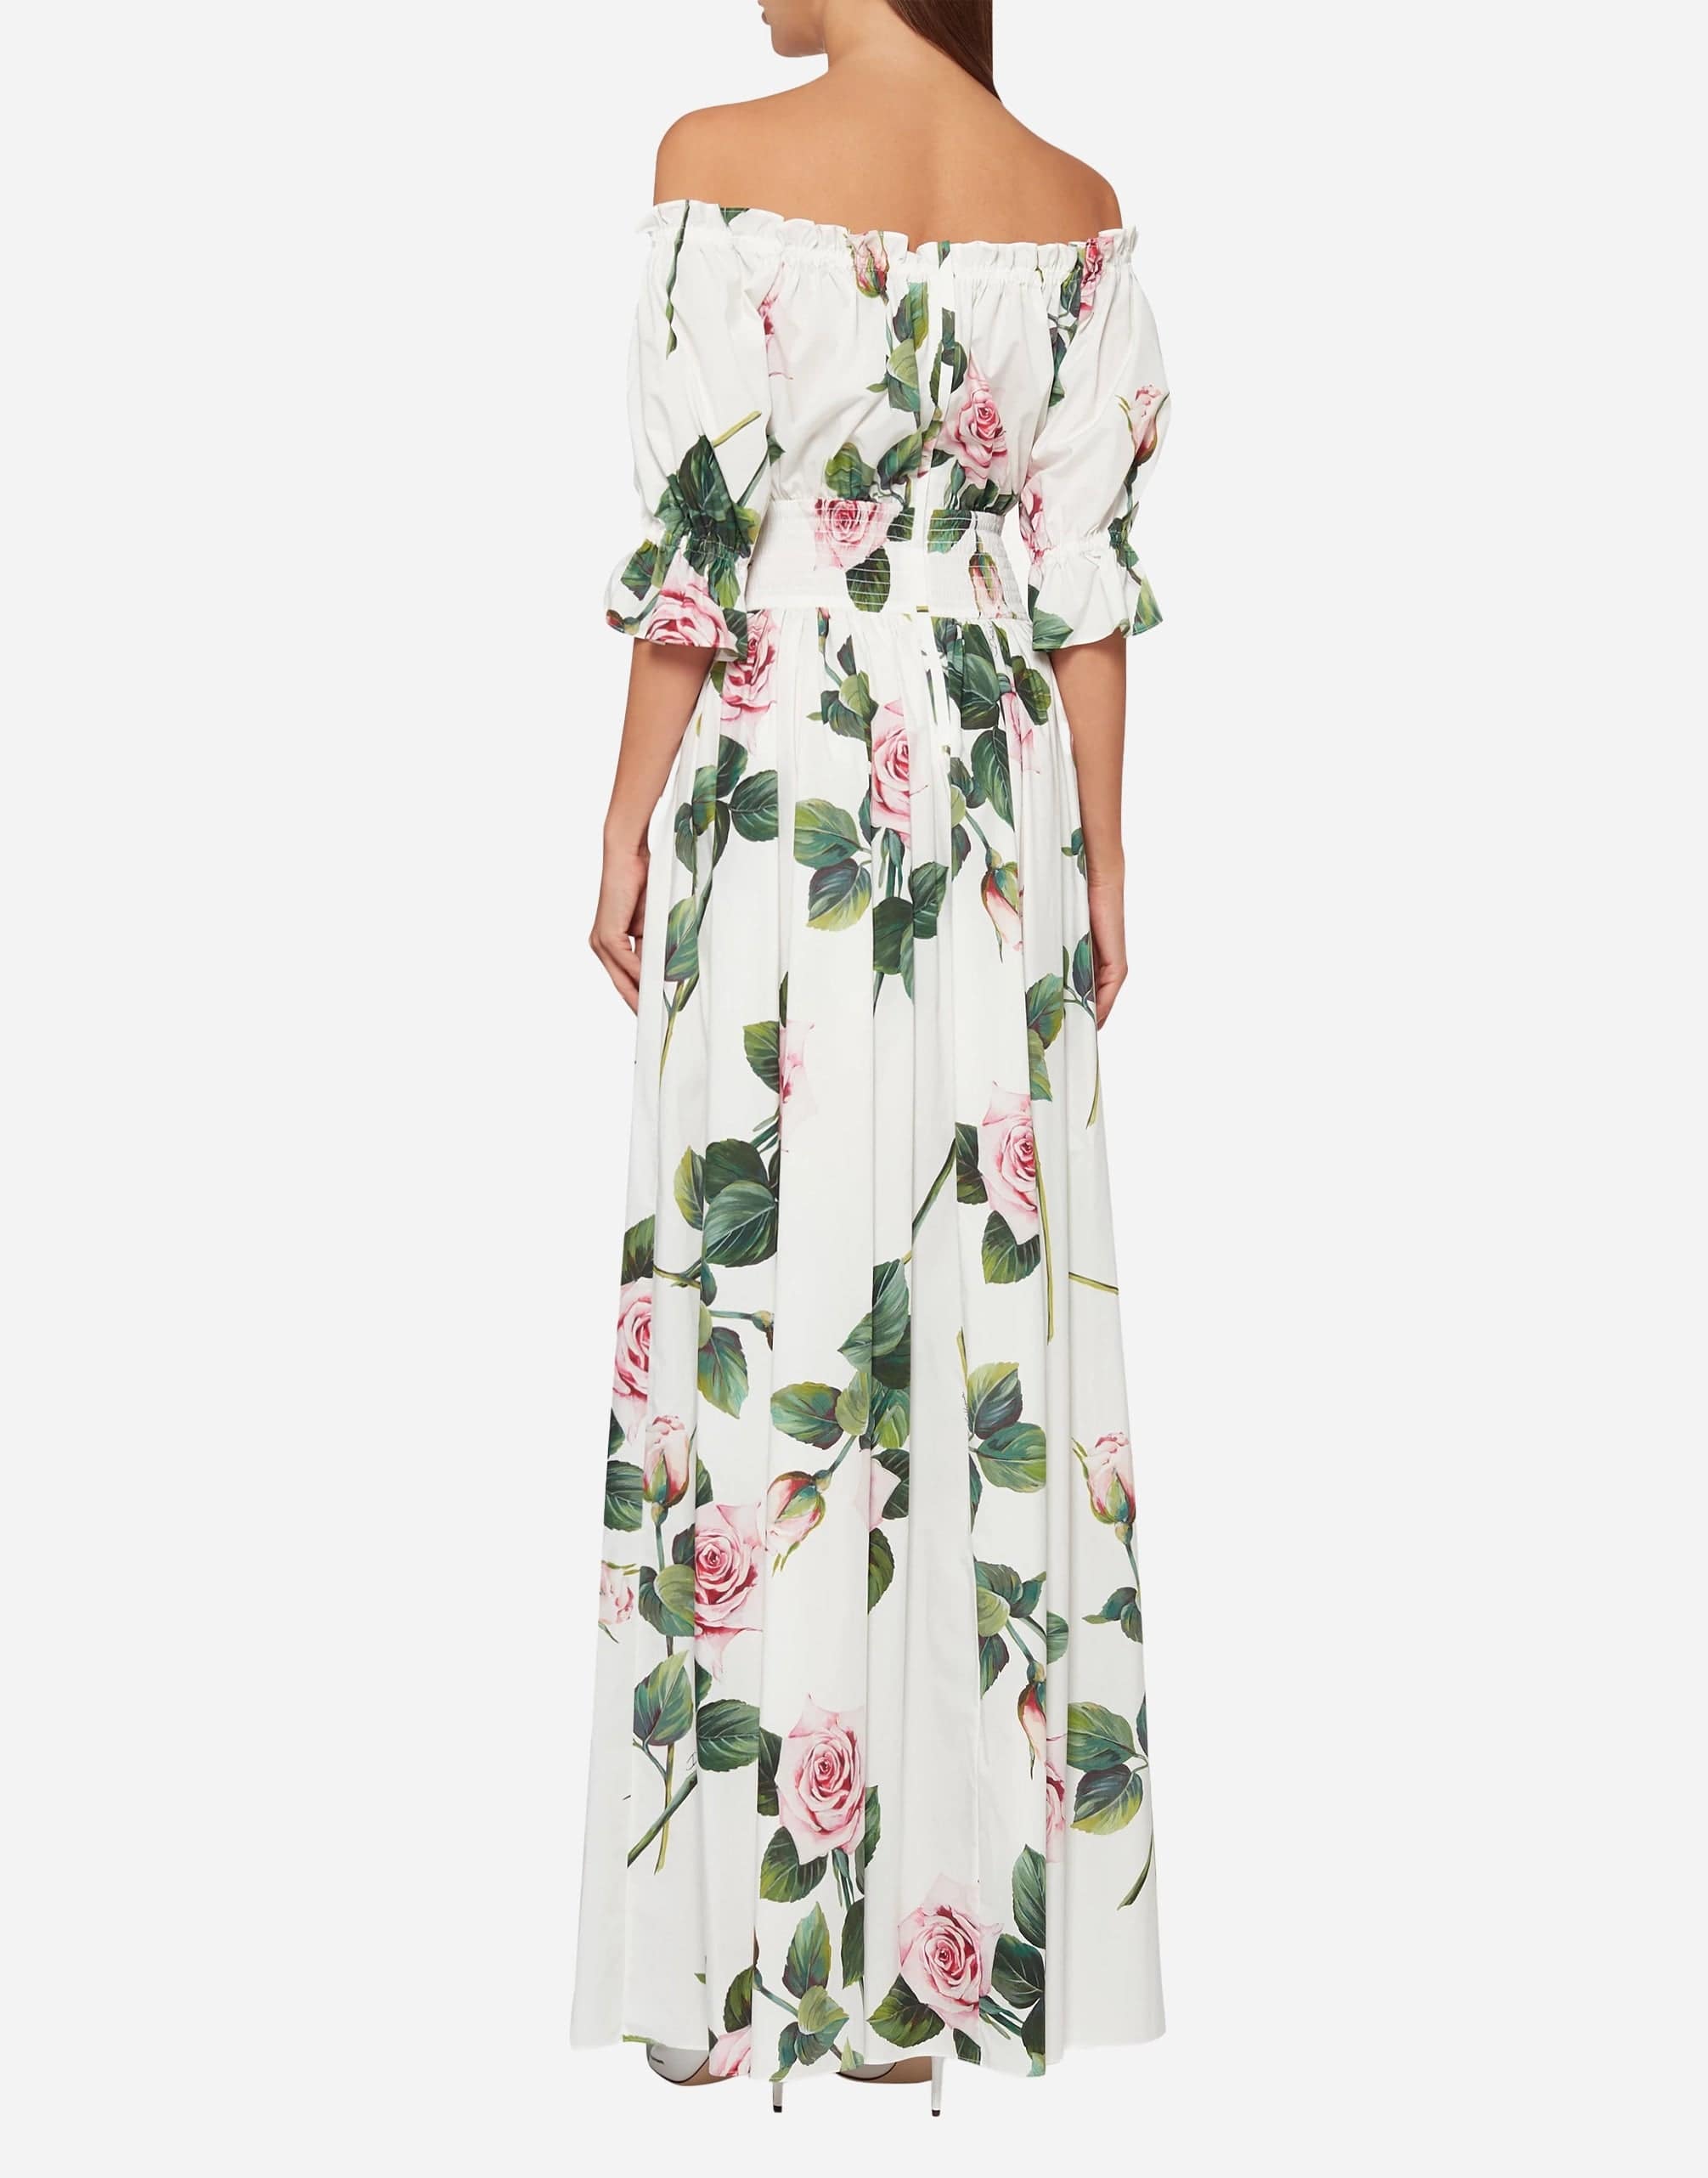 Dolce & Gabbana Tropical Rose Print Off-The-Shoulder Dress